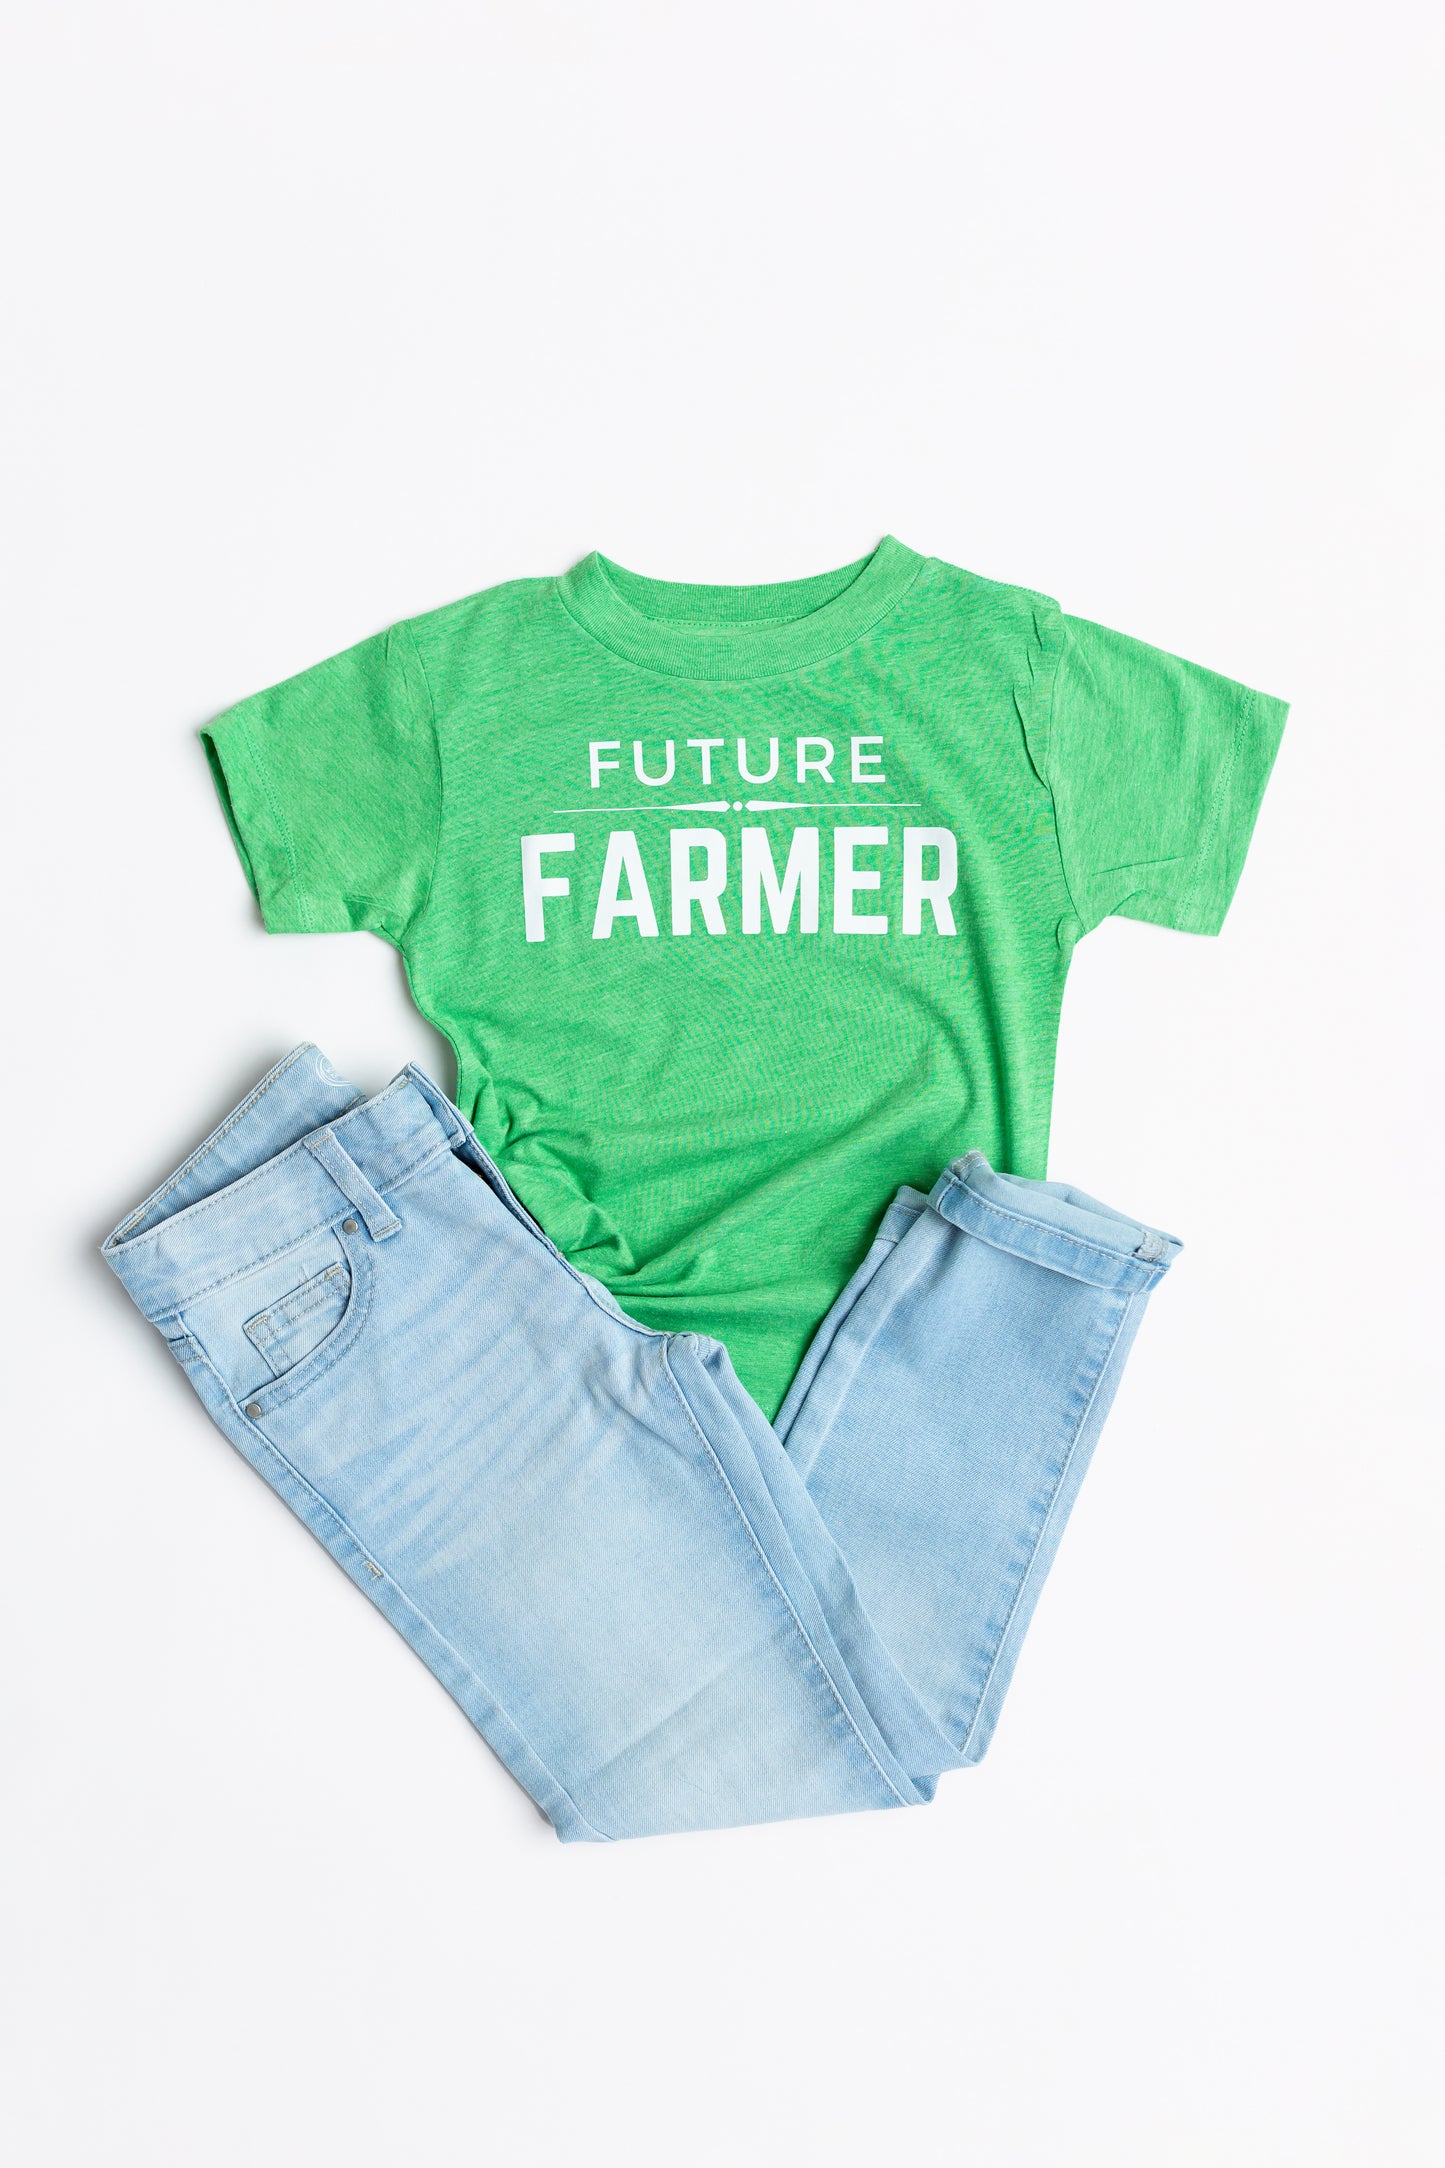 Future Farmer Tee - Youth, Toddler & Onesie